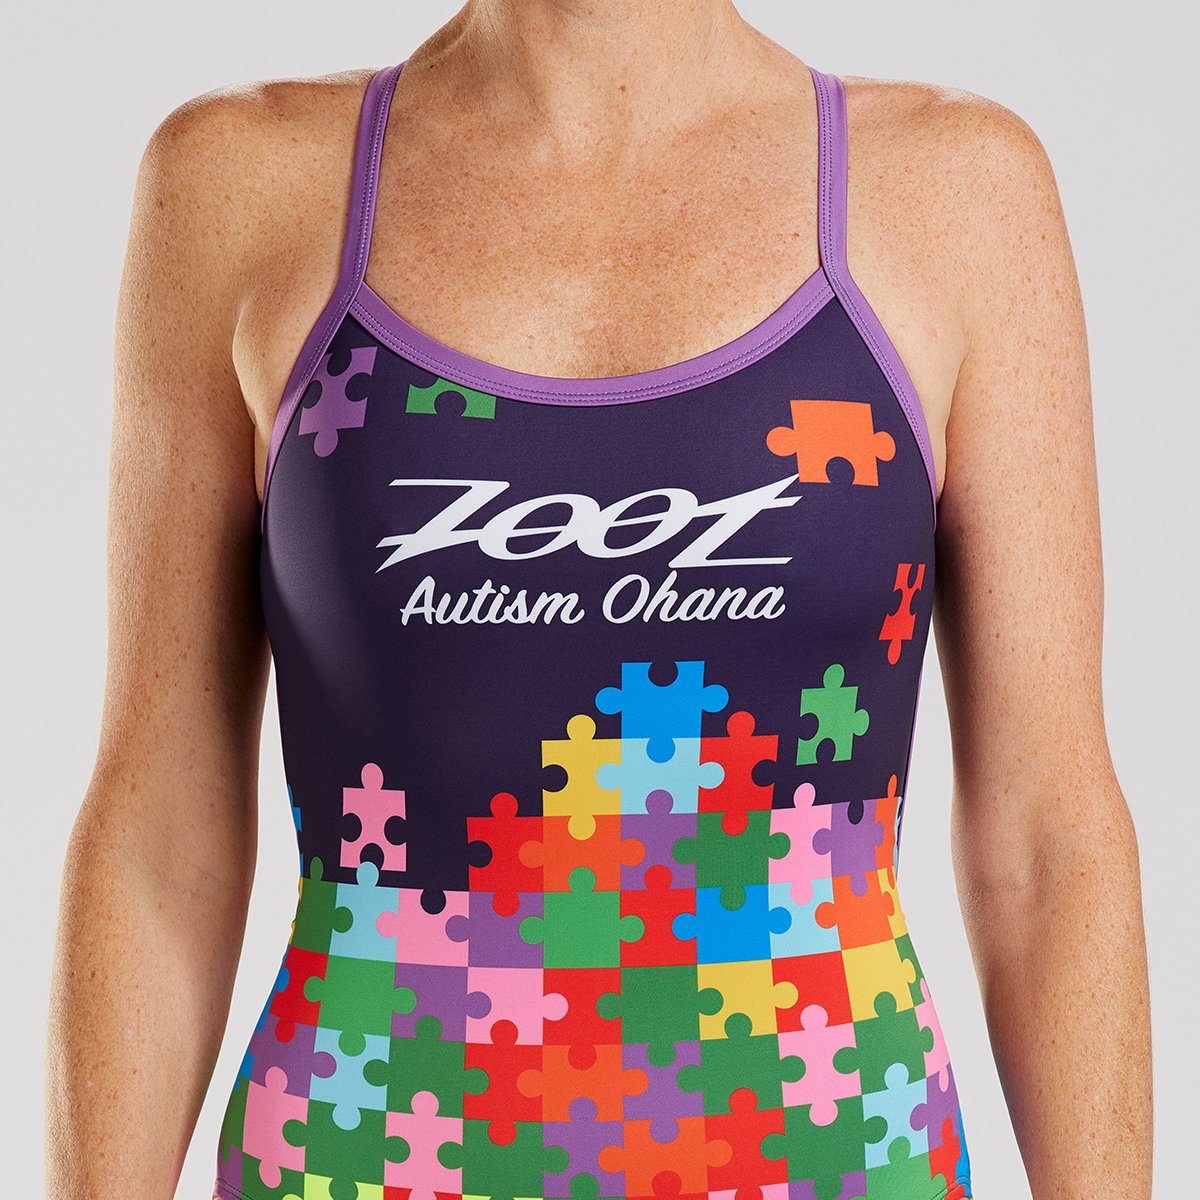 Women's Ltd Swimsuit - Autism Ohana